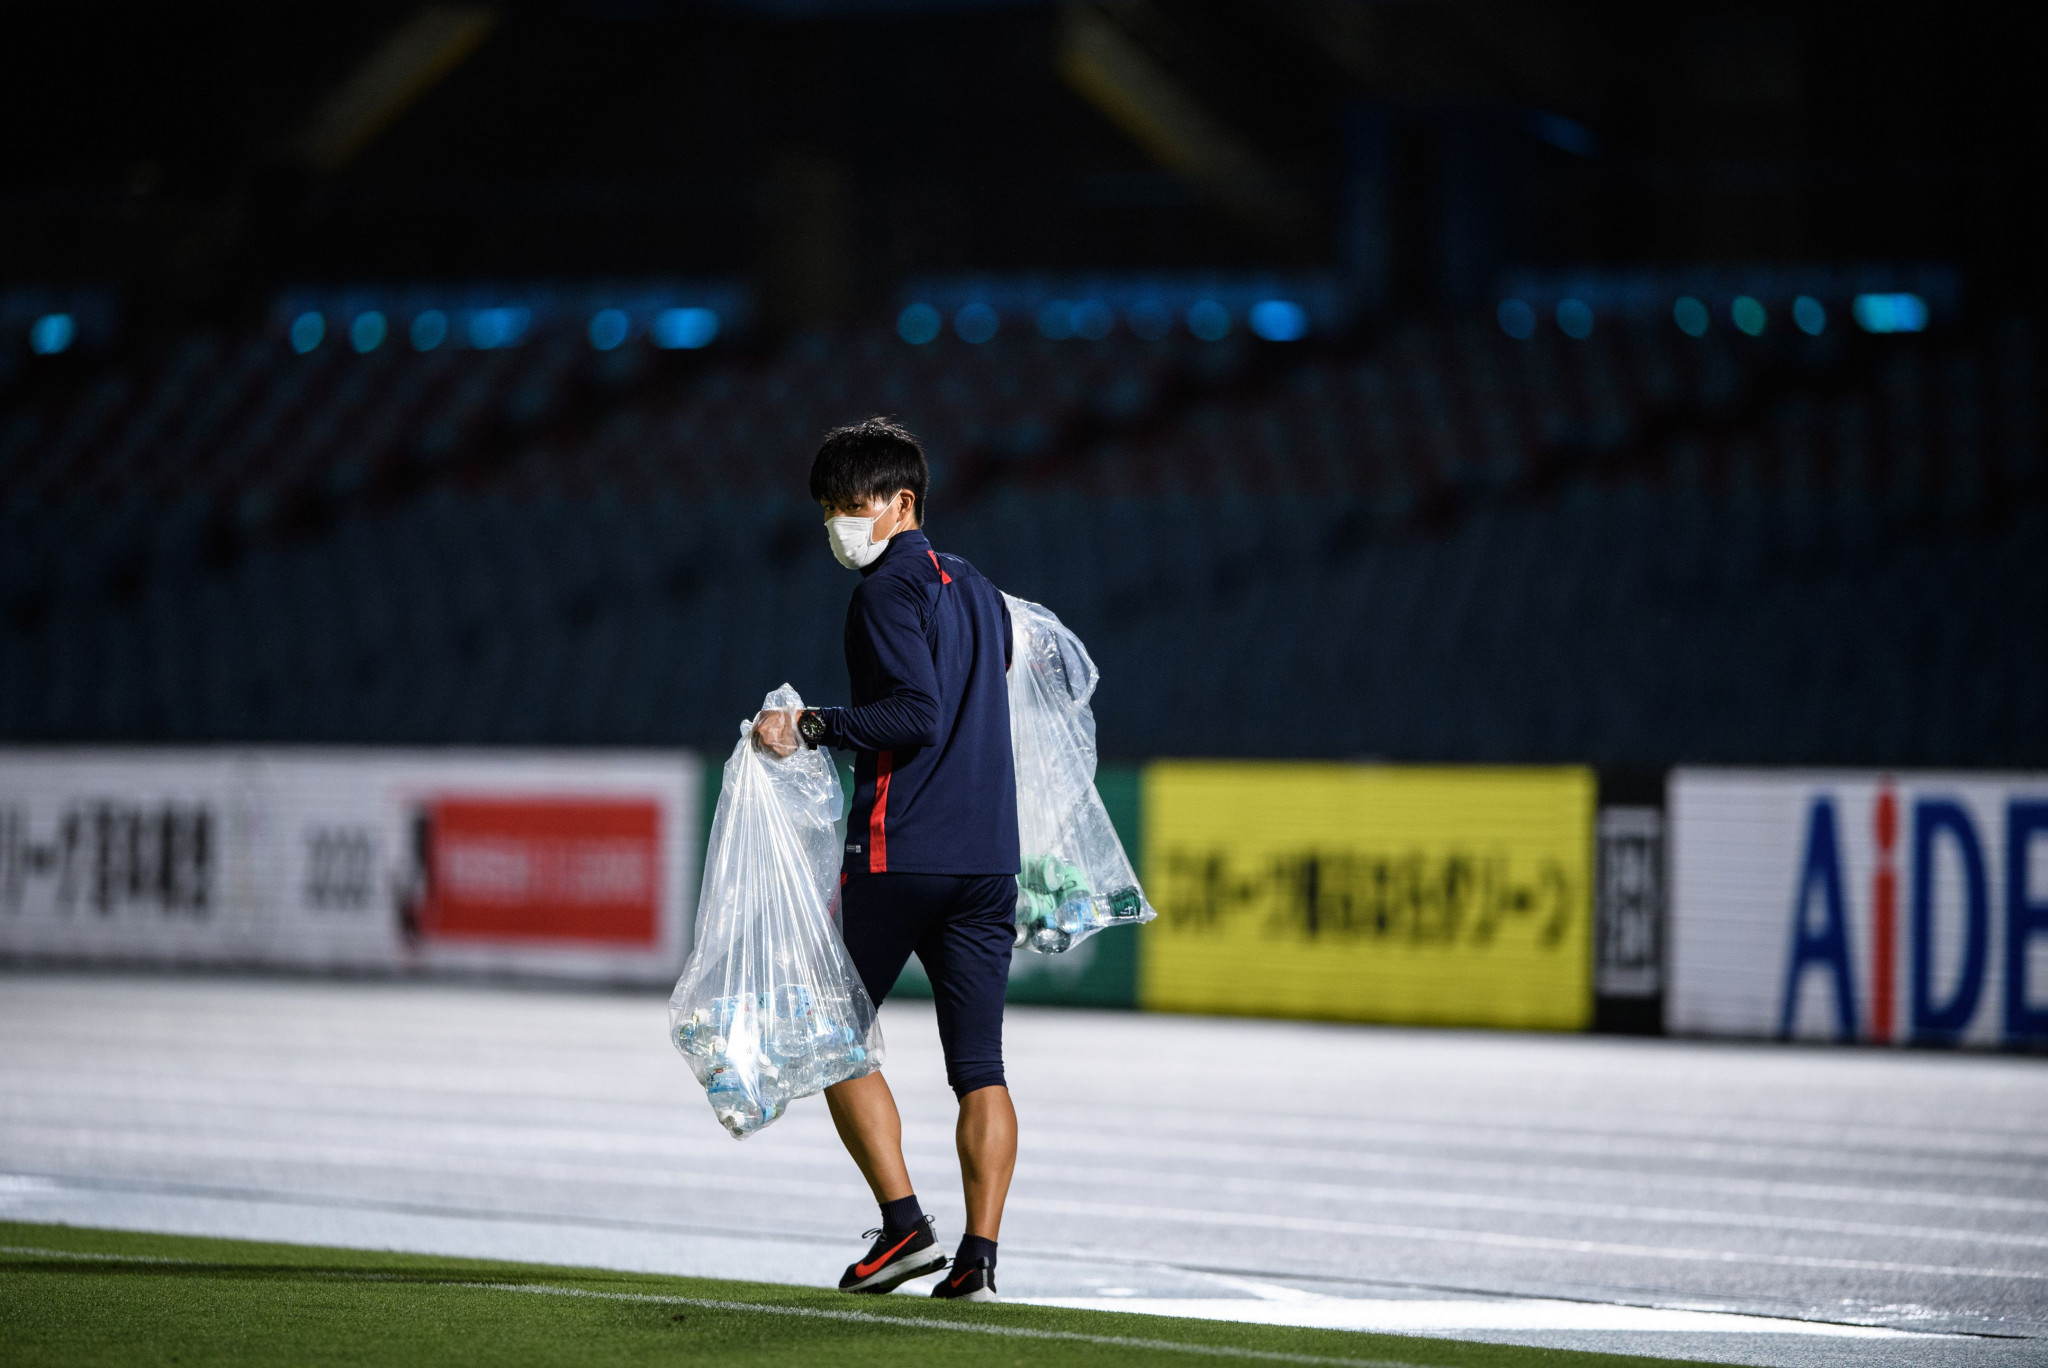 J-League forced to postpone fixture over positive coronavirus tests